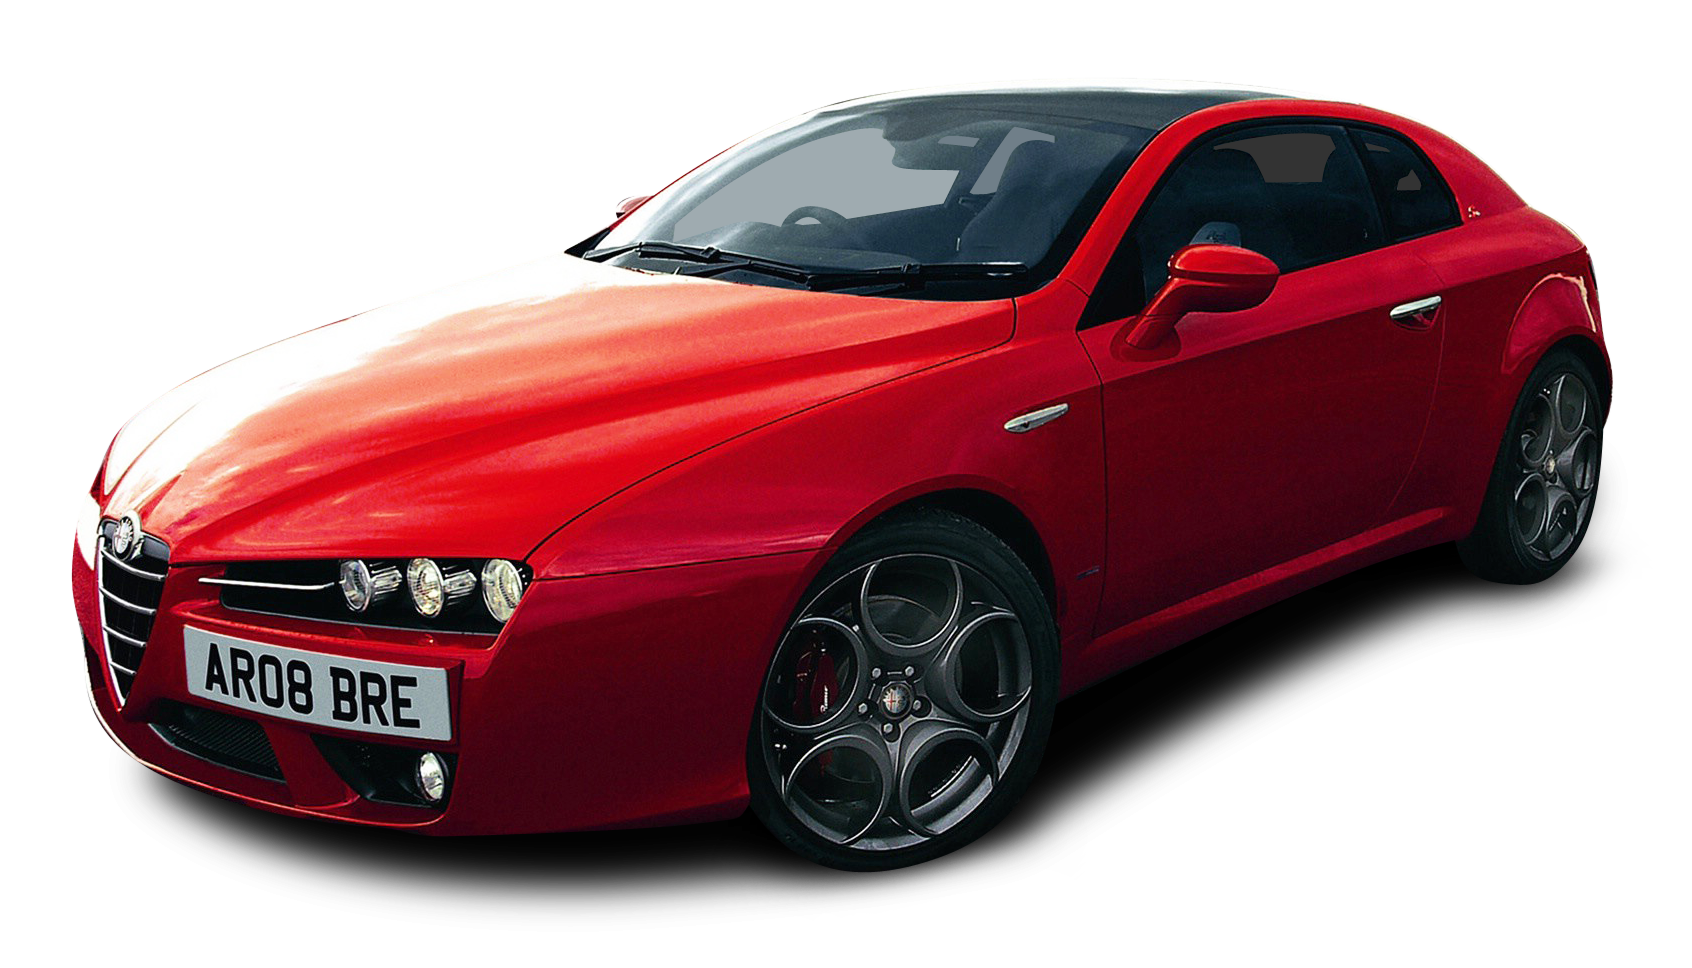 Red Alfa Romeo Brera S Car